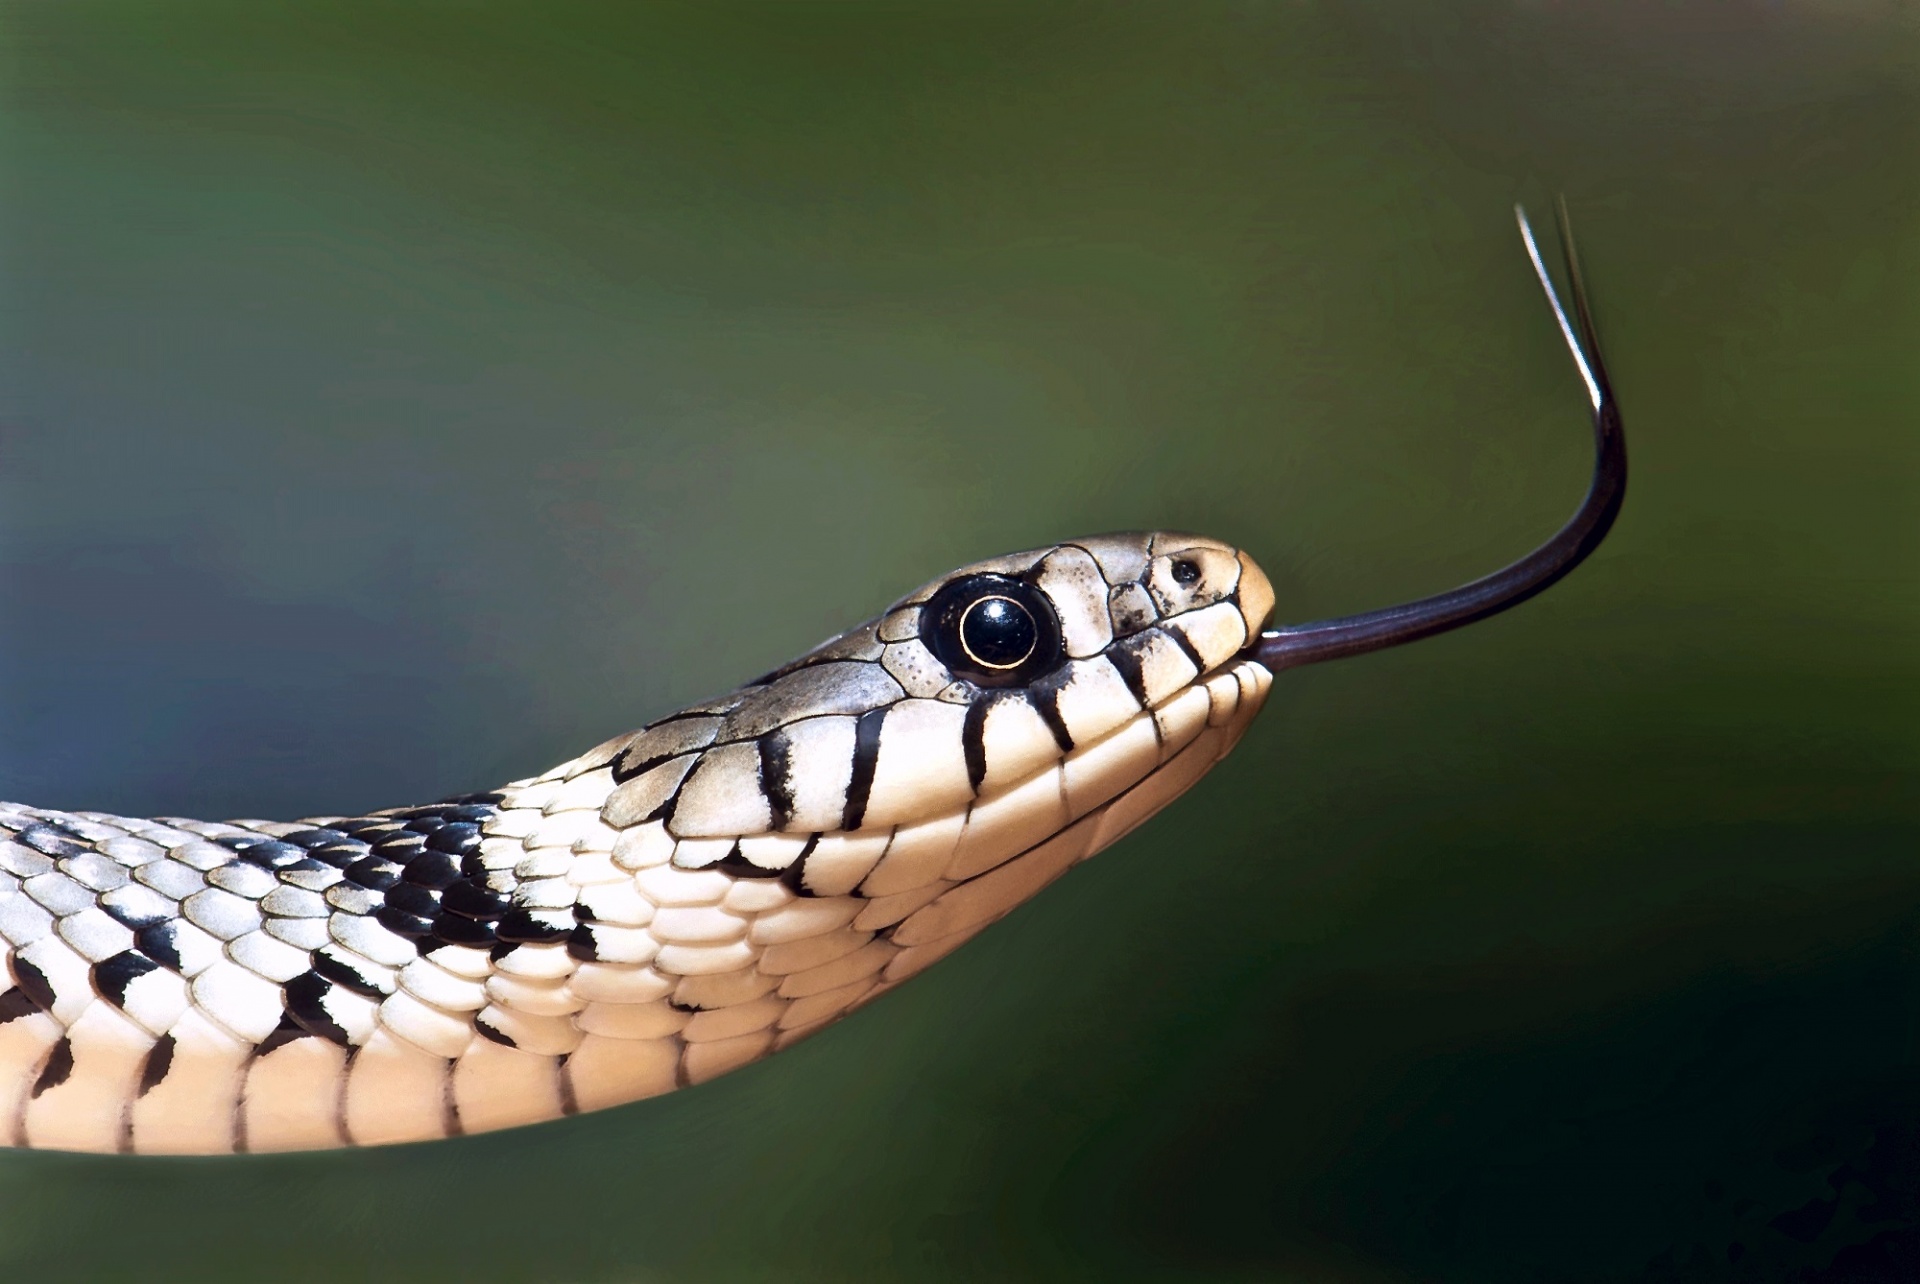 European Grass Snake close up portrait view